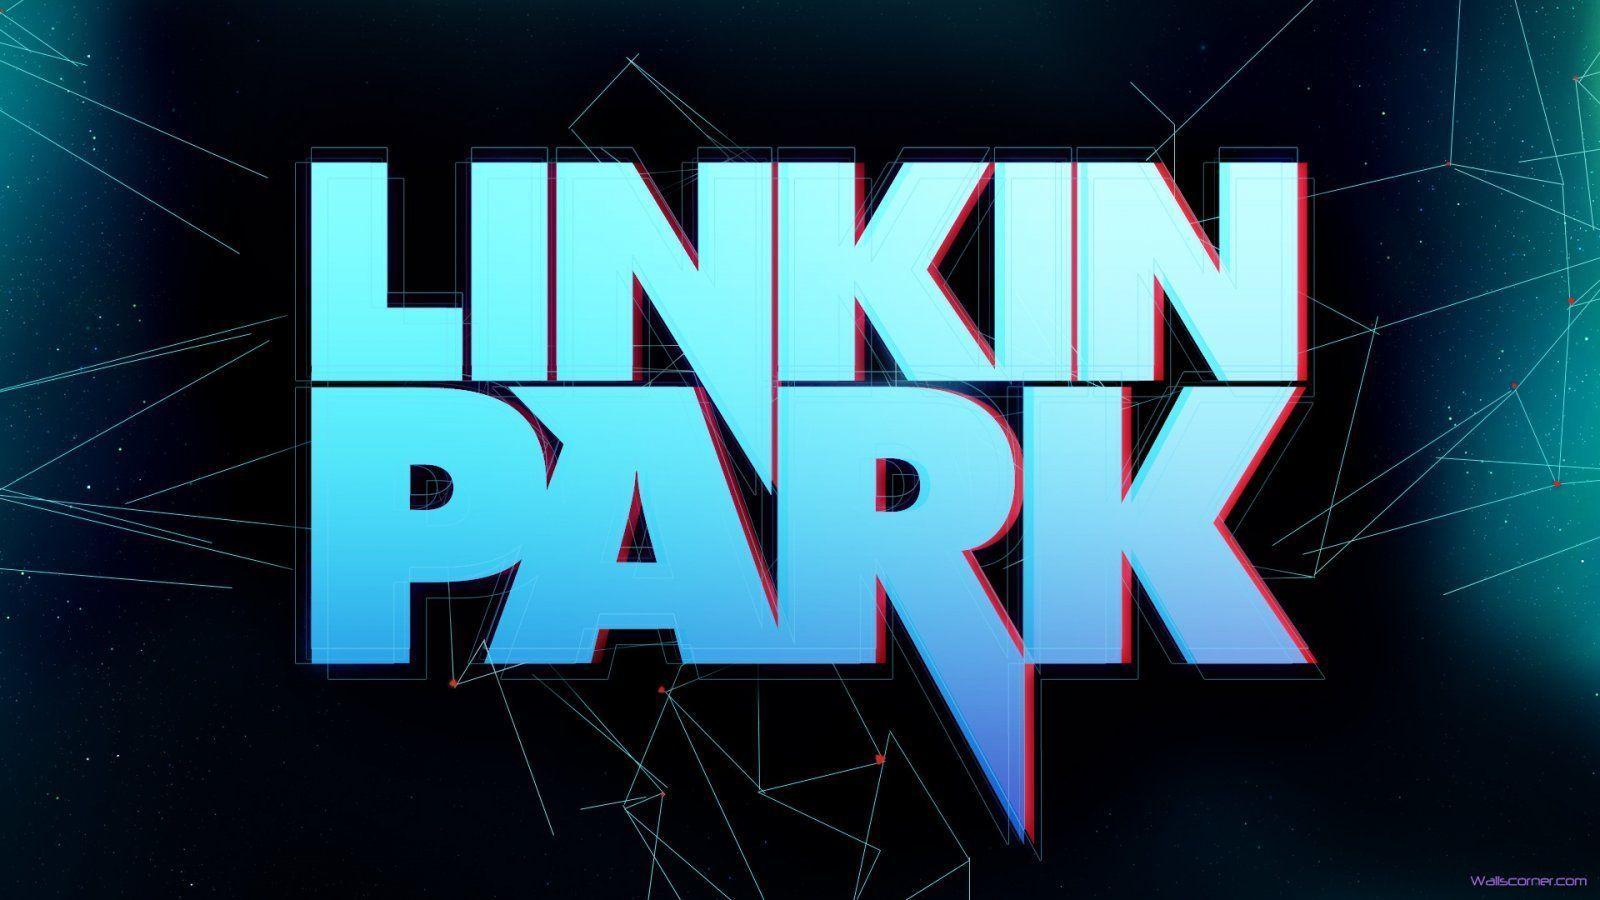 Beauty linkin park logo 1080p HD wallpaper Wallpaper 1600x900 2015